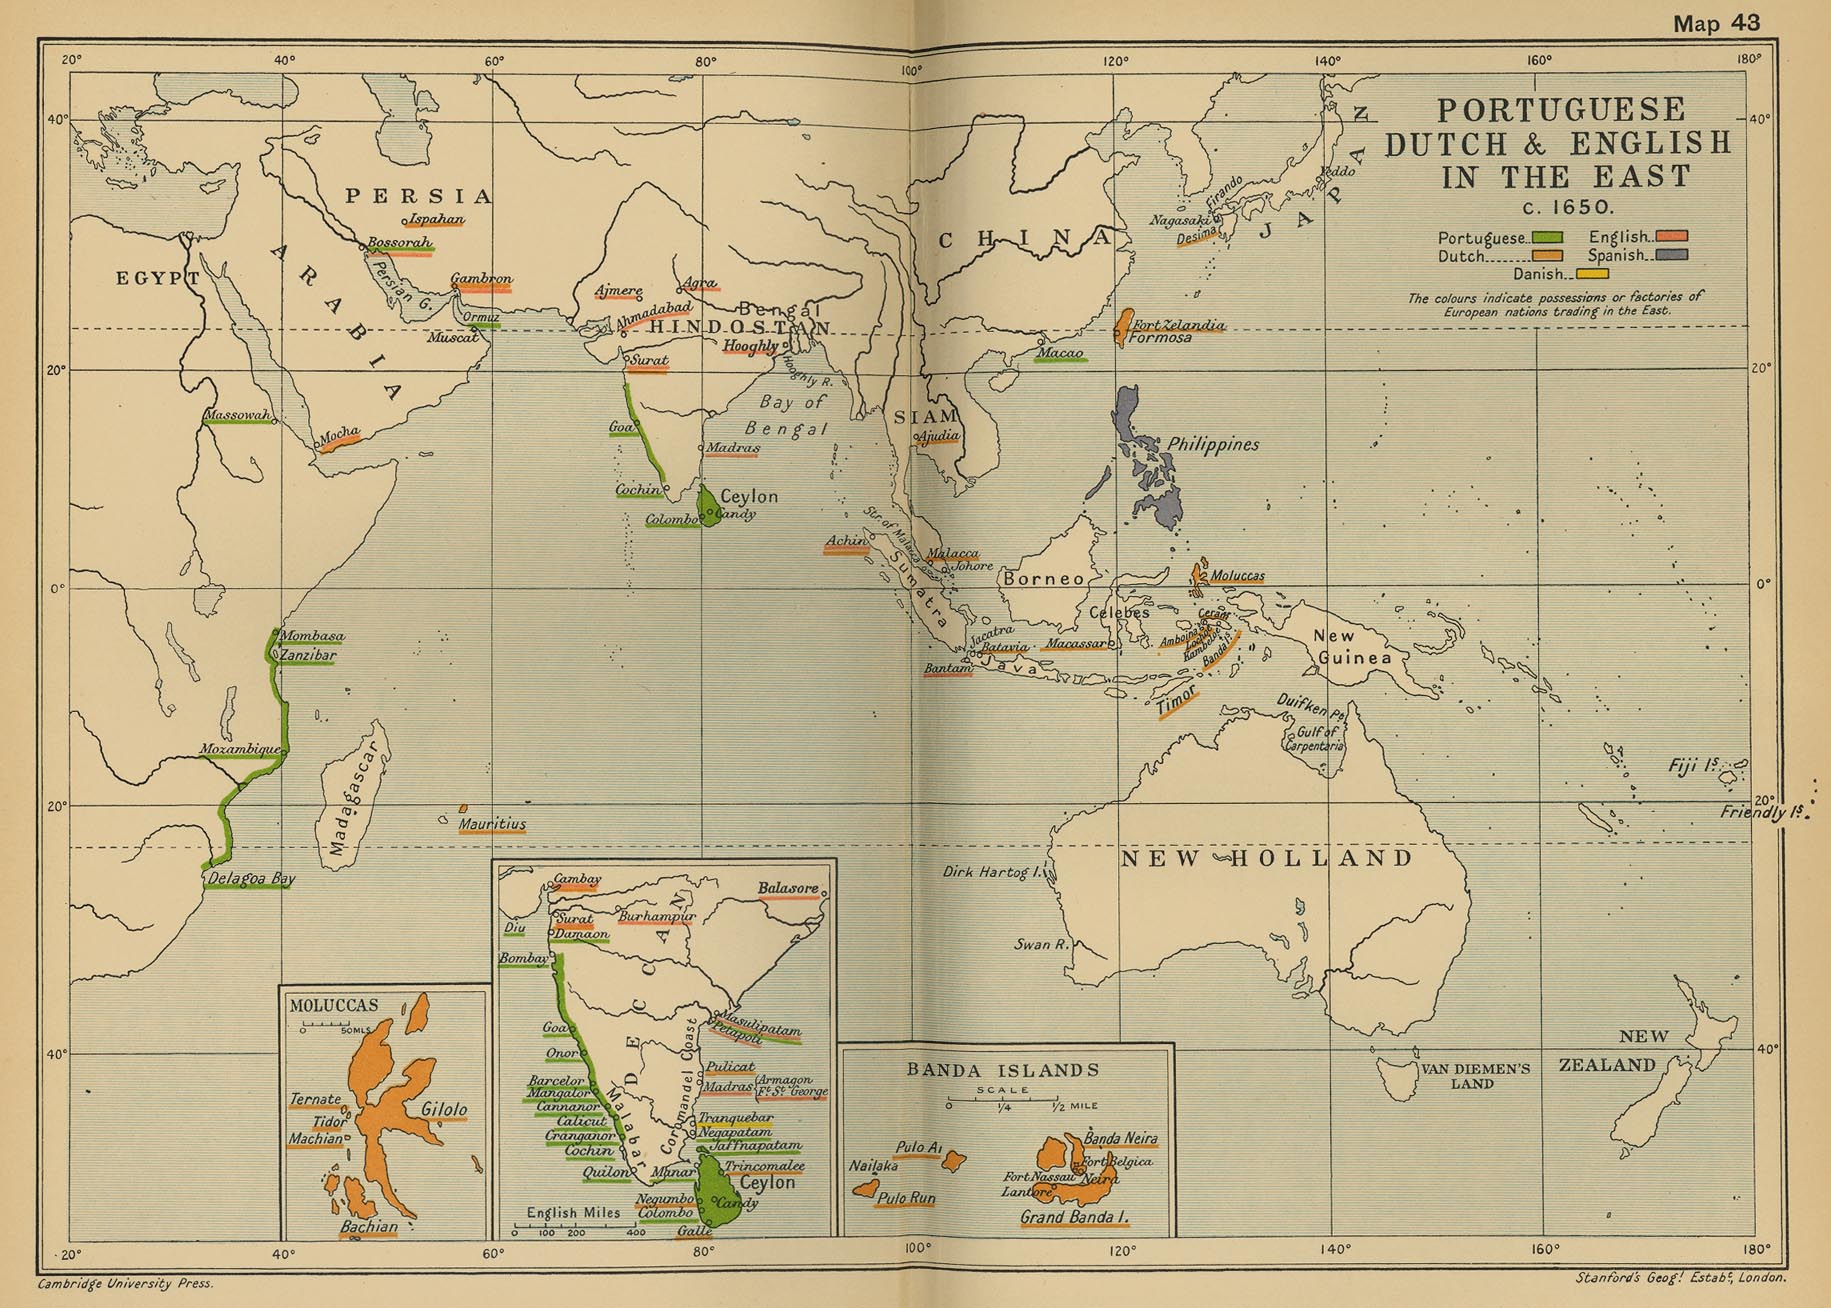 http://www.lib.utexas.edu/maps/historical/ward_1912/portuguese_dutch_english_east_1650.jpg